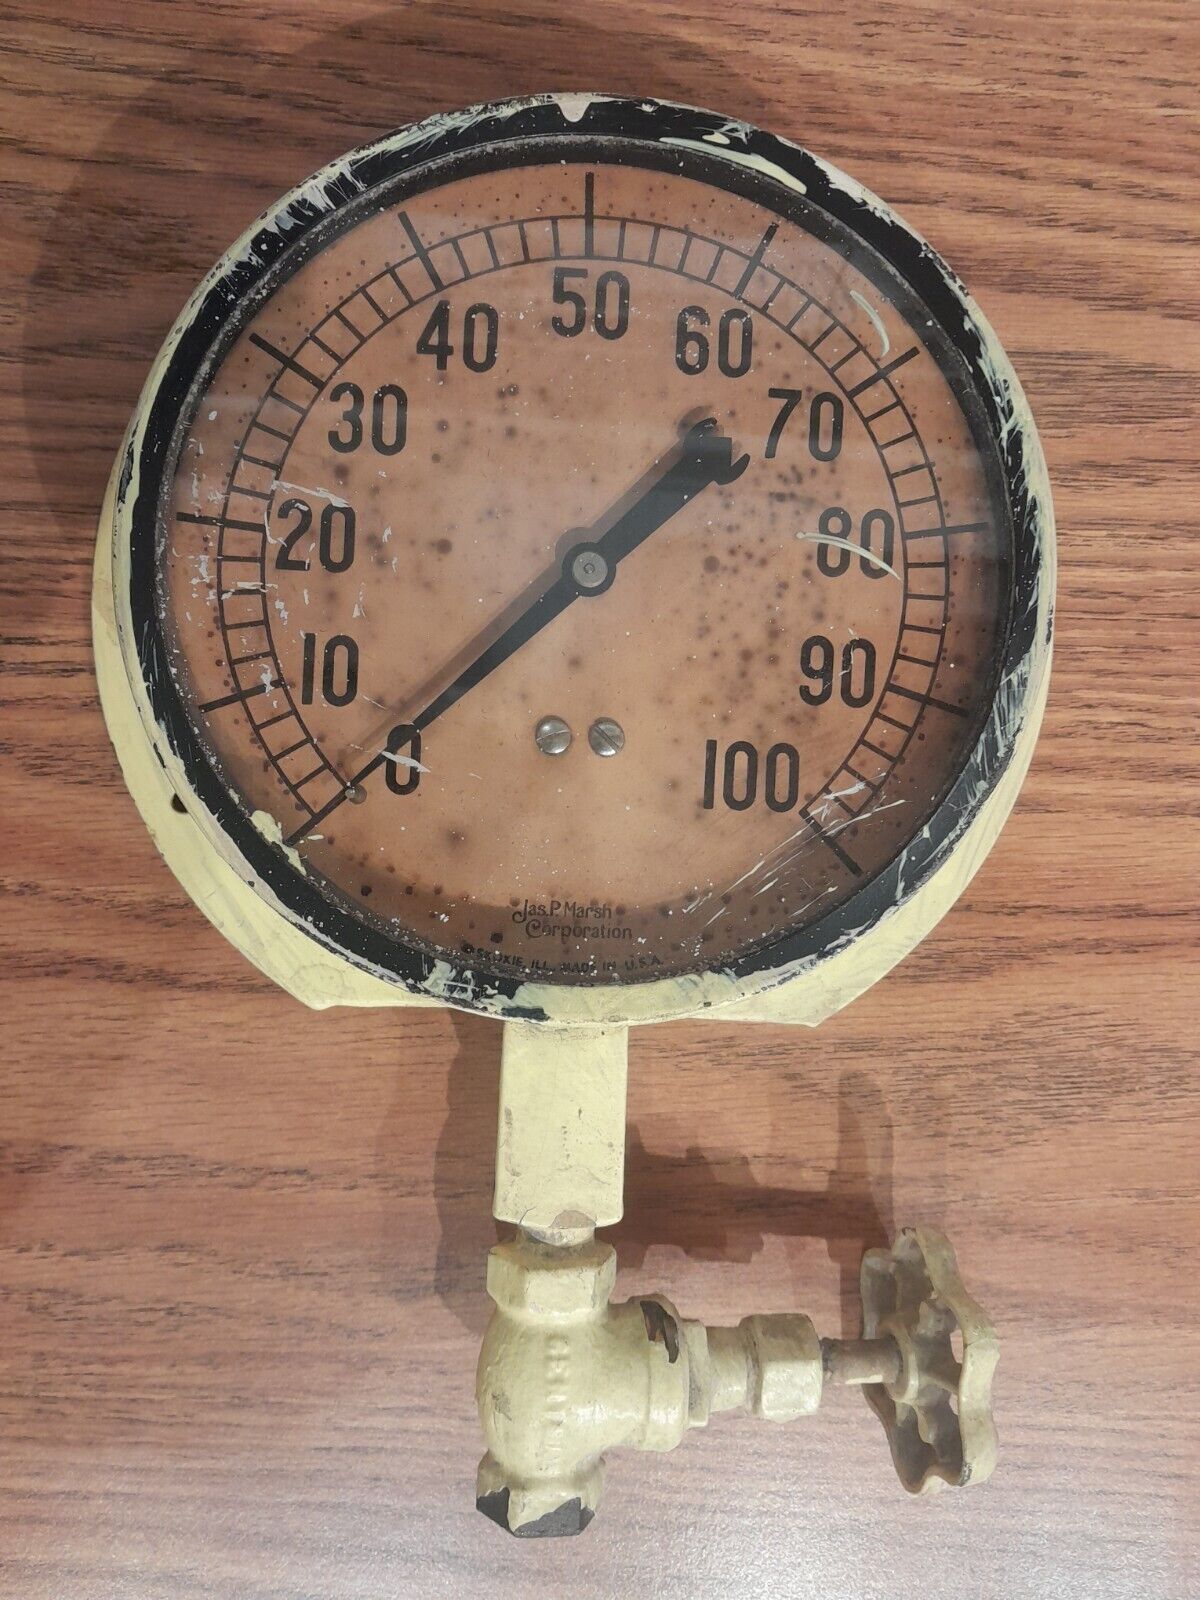 Antique Jas. P. Marsh Pressure Gauge Steampunk Style 100 PSI Complete